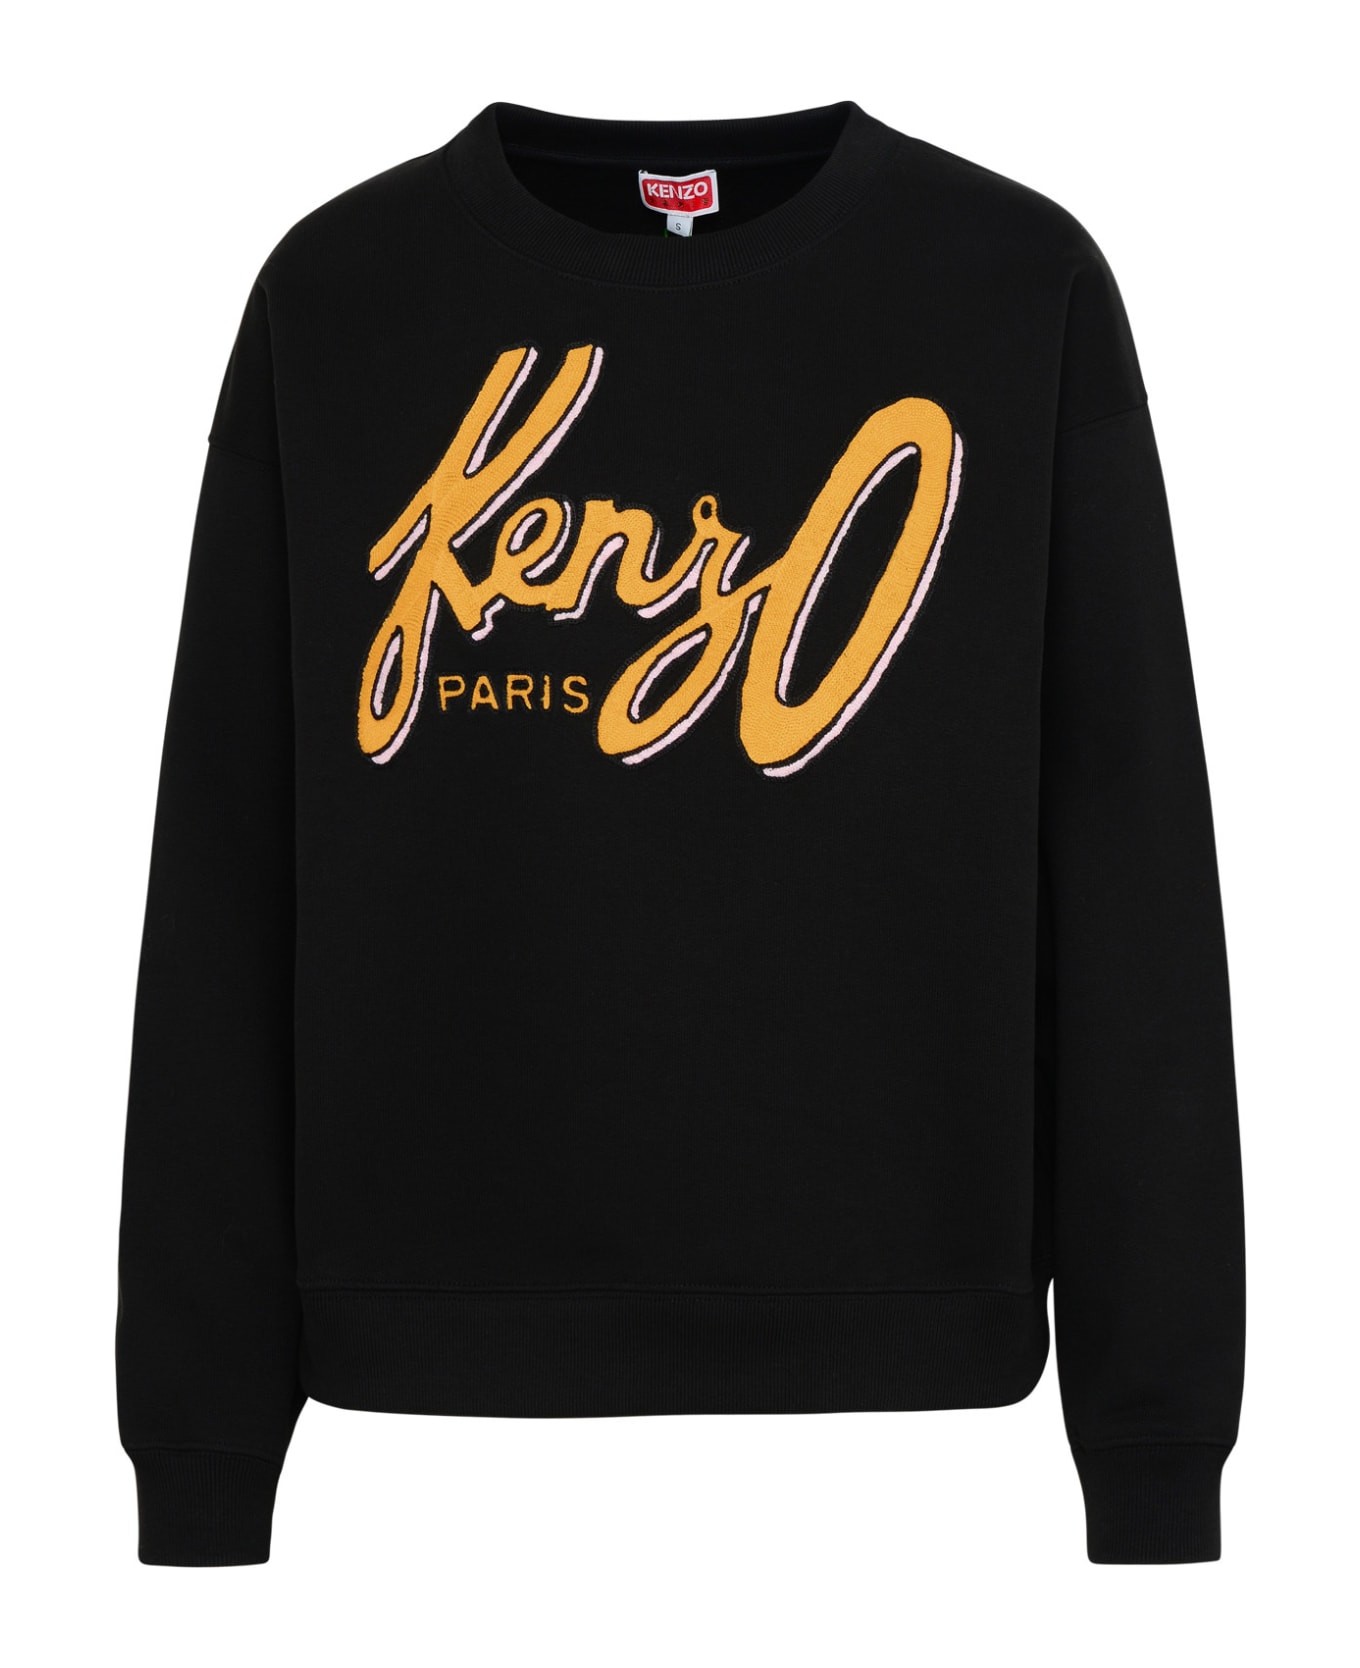 Kenzo Black Cotton Blend Sweatshirt - Black